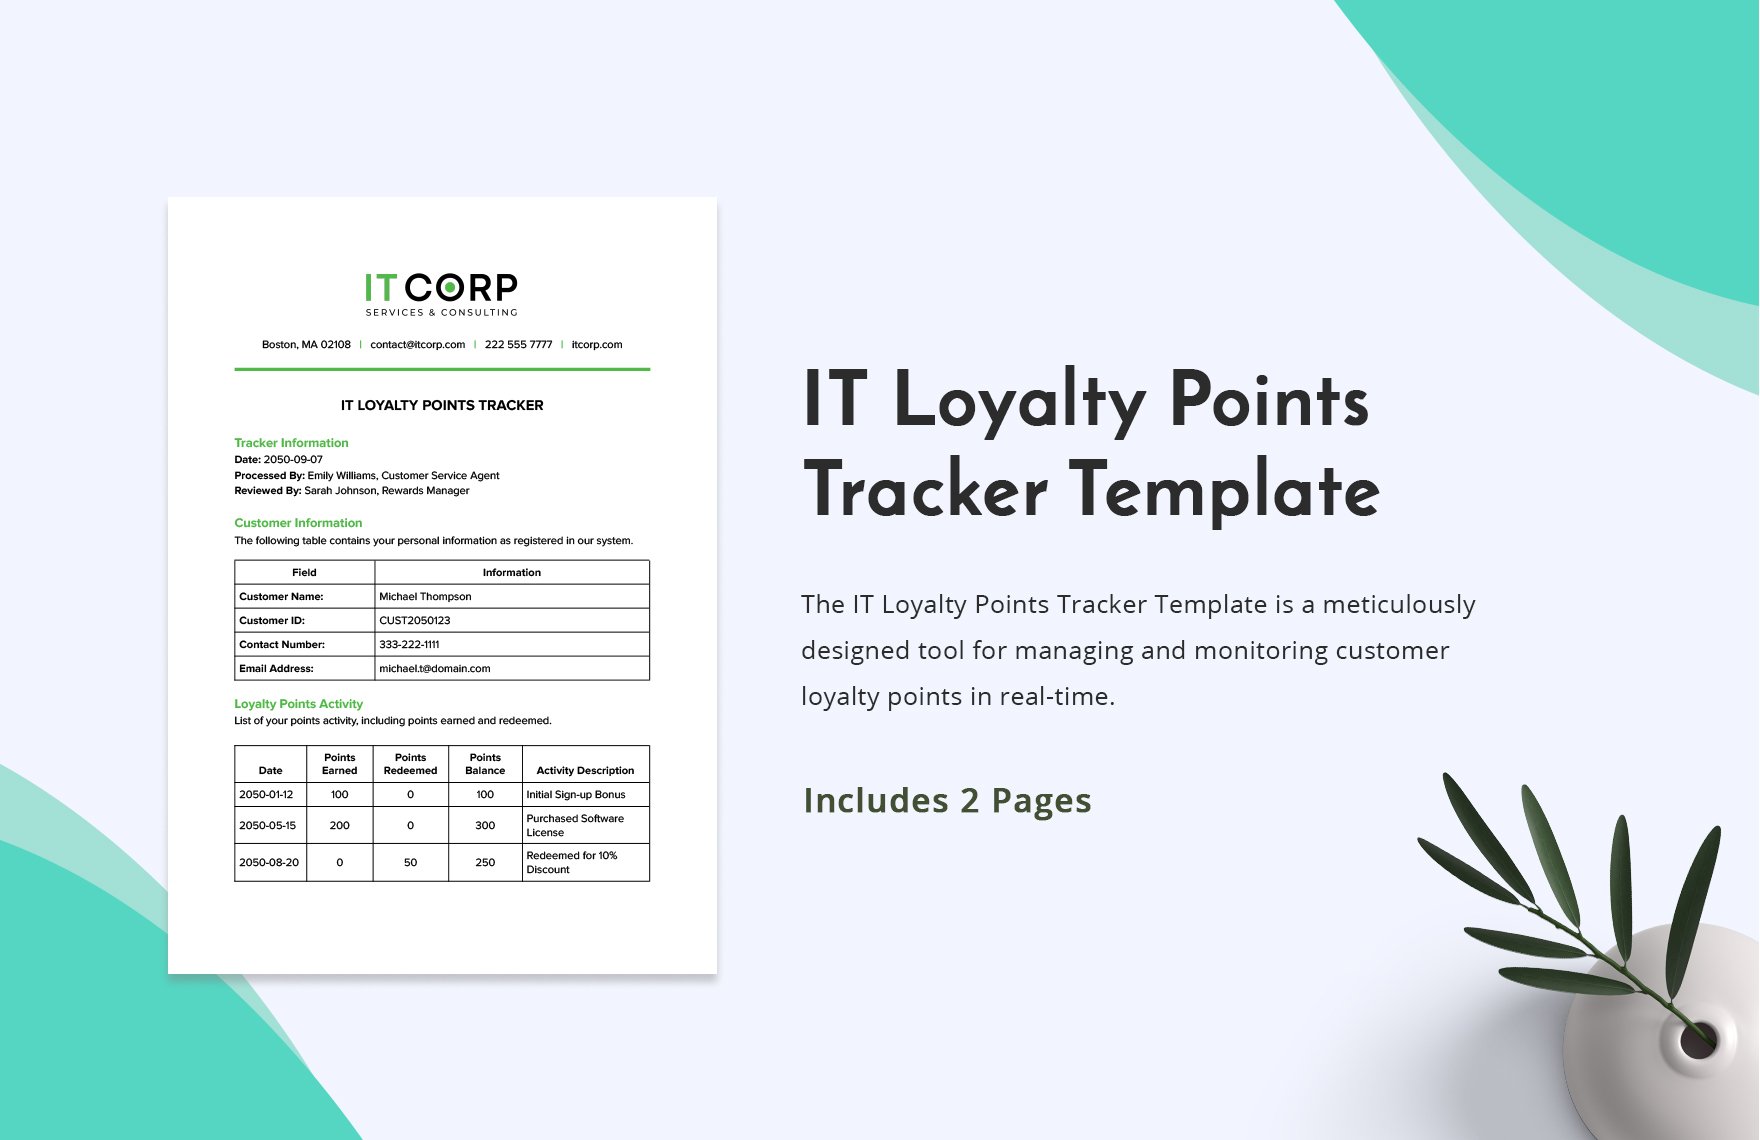 IT Loyalty Points Tracker Template